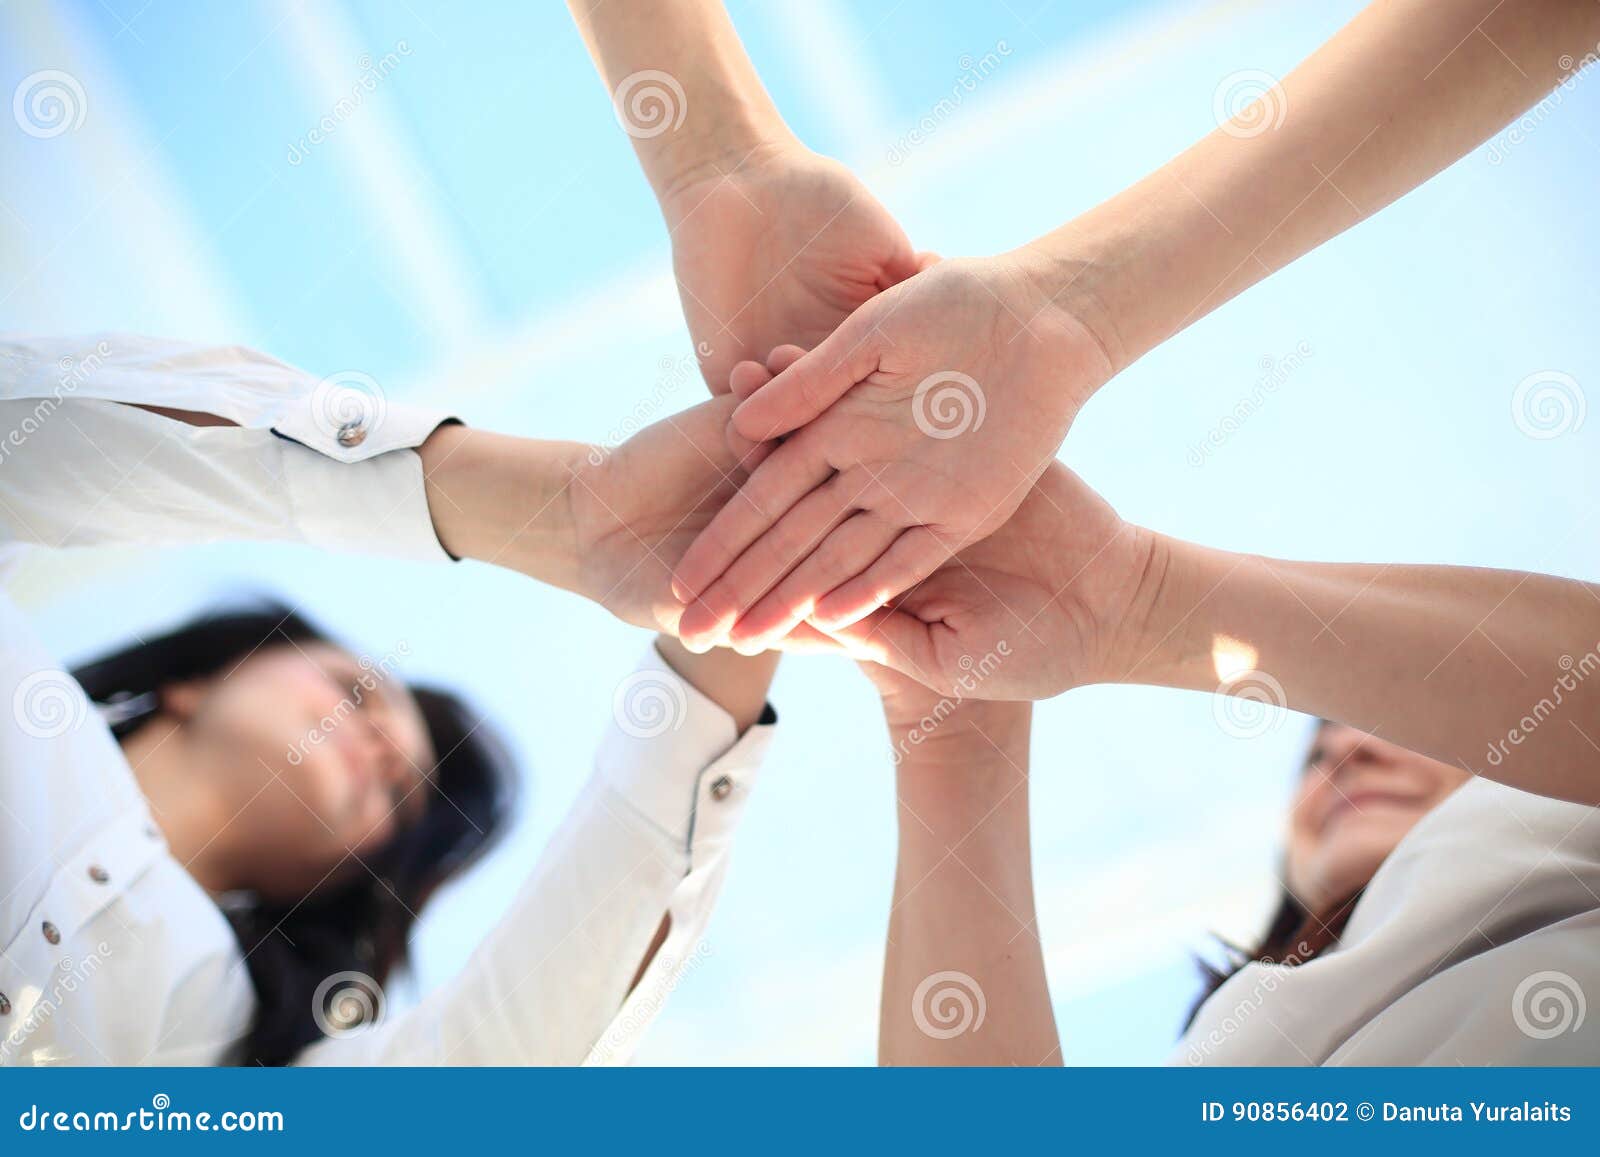 business people collaboration teamwork union concept